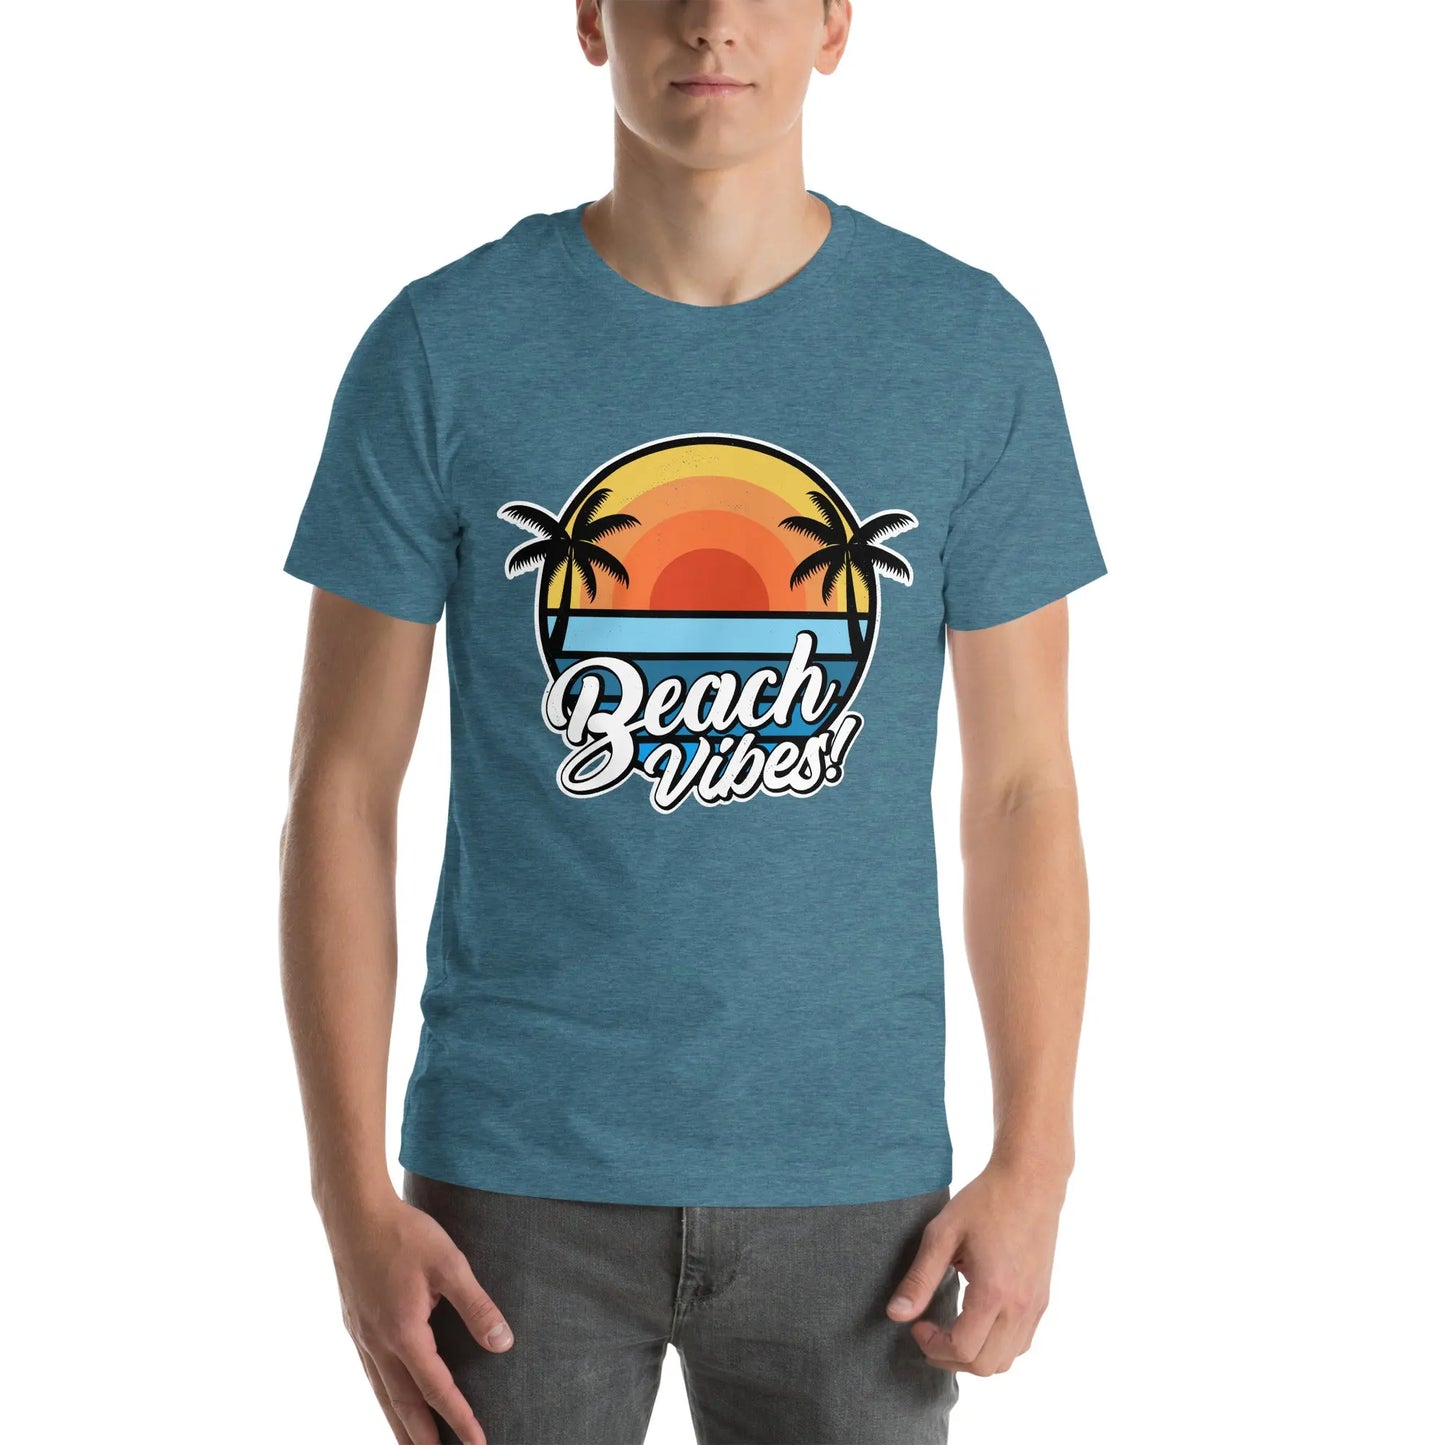 Beach Vibes with this Coastal Adult Unisex T-Shirt - Coastal Journeyz9496443_8481